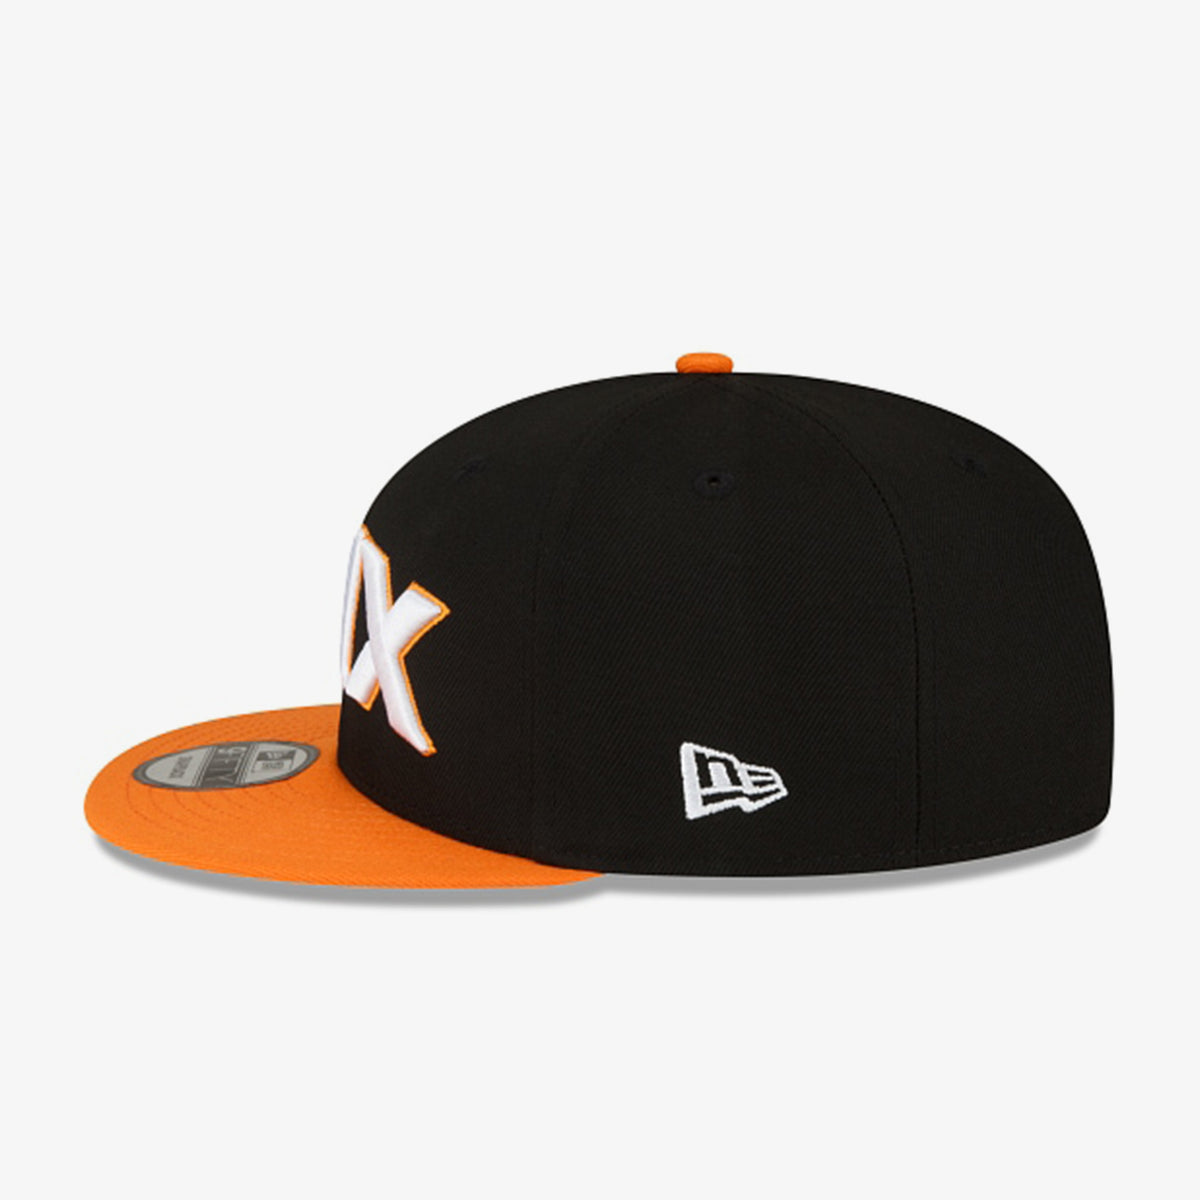 Men's Phoenix Suns New Era Orange Statement Edition 9FIFTY Adjustable Hat